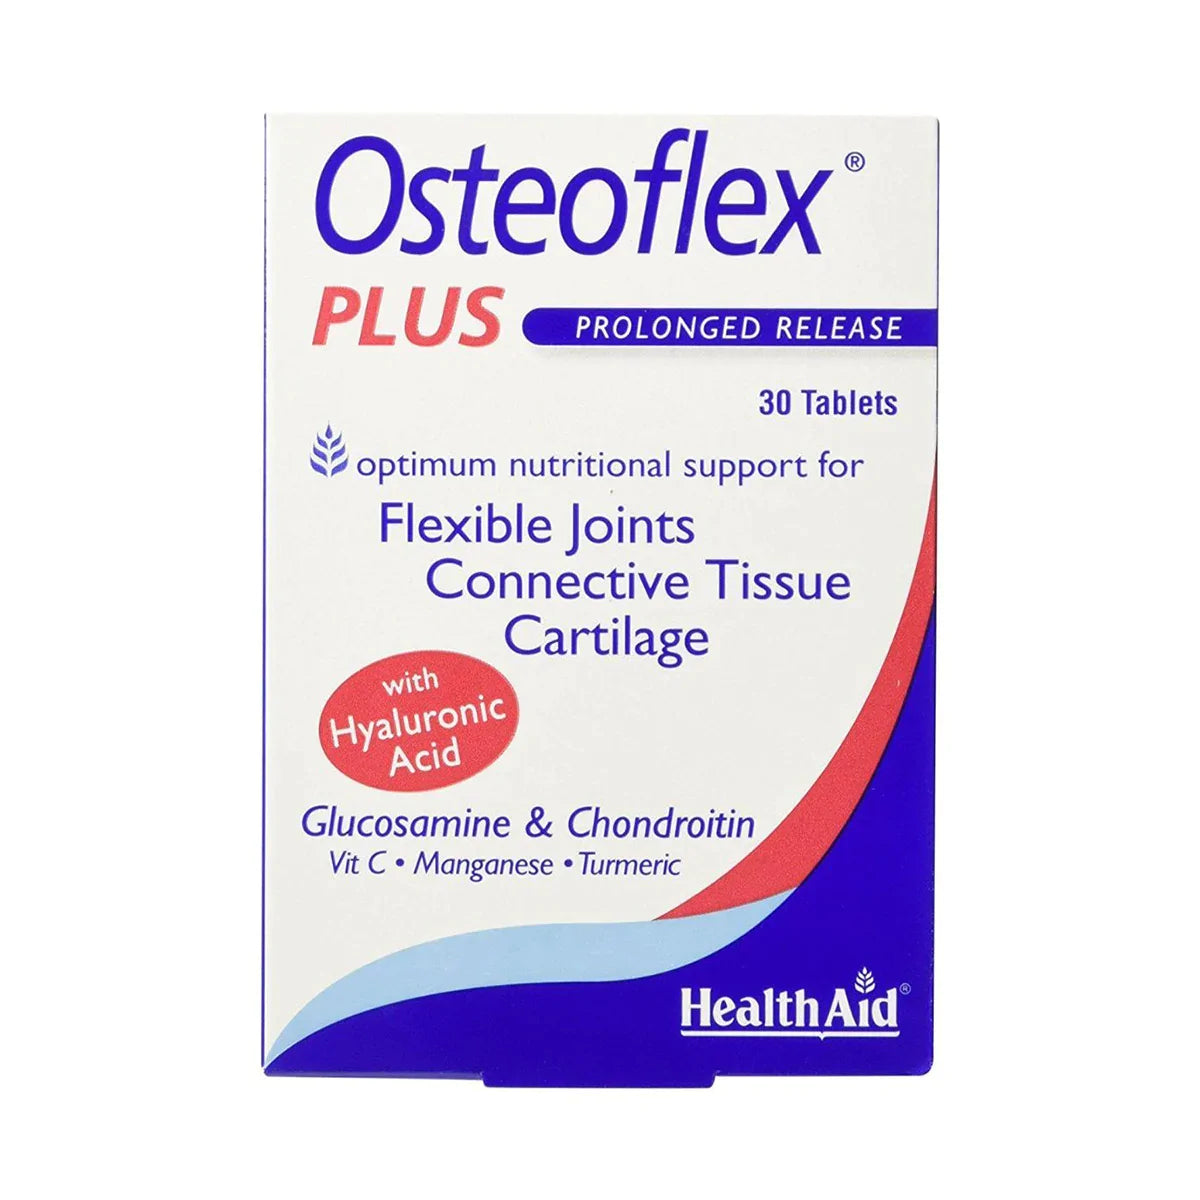 HEALTHAID OSTEOFLEX PLUS, 30 TABLETS